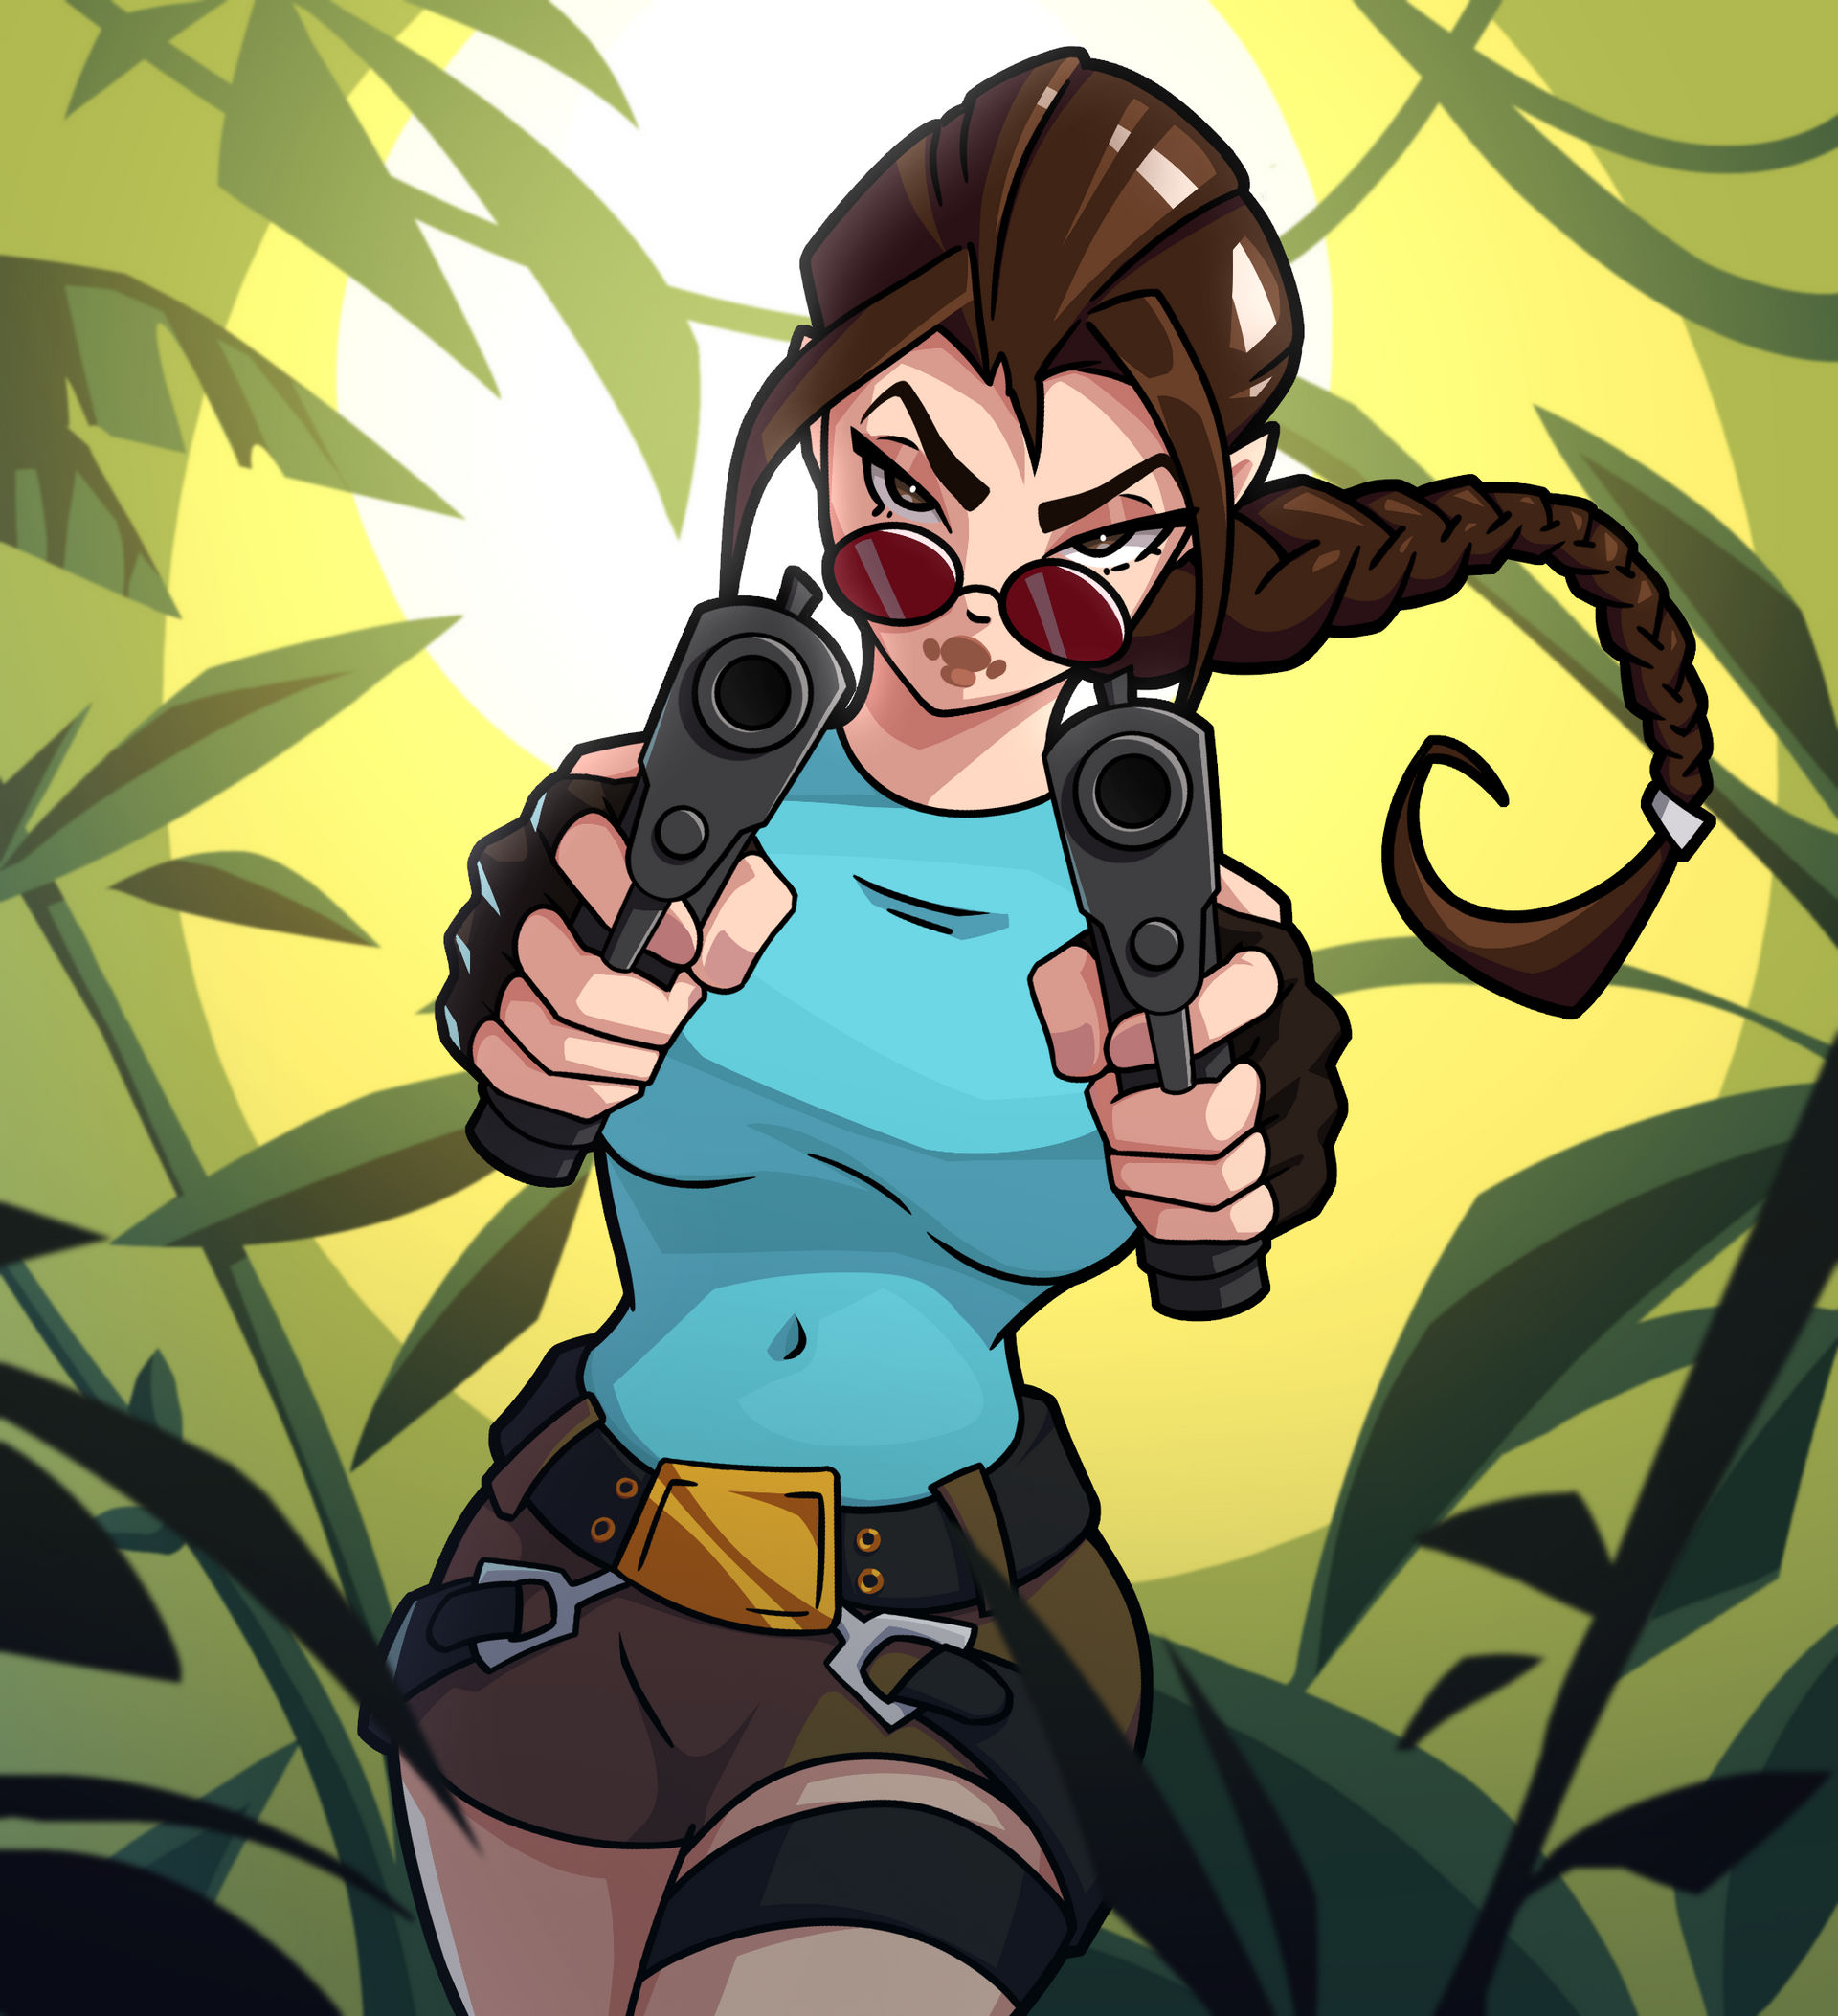 Lara Croft - Tomb Raider Netflix [commission] by ArtofFadoo on